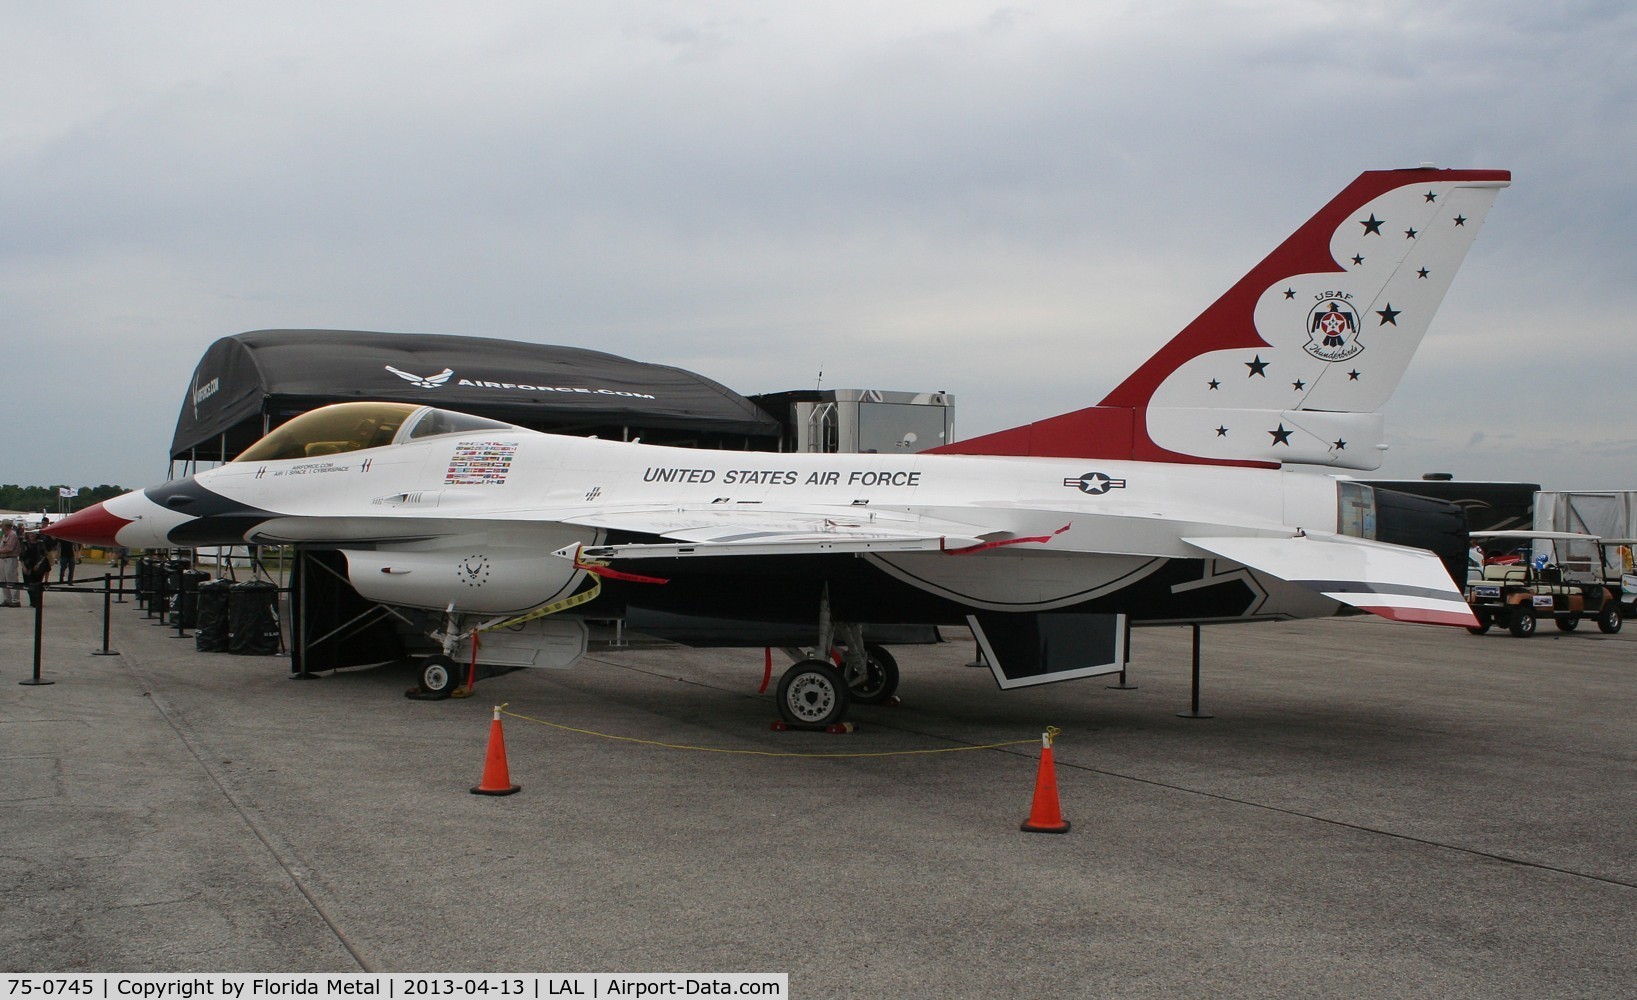 75-0745, 1977 General Dynamics YF-16A Fighting Falcon C/N 61-1, F-16 painted as Thunderbirds